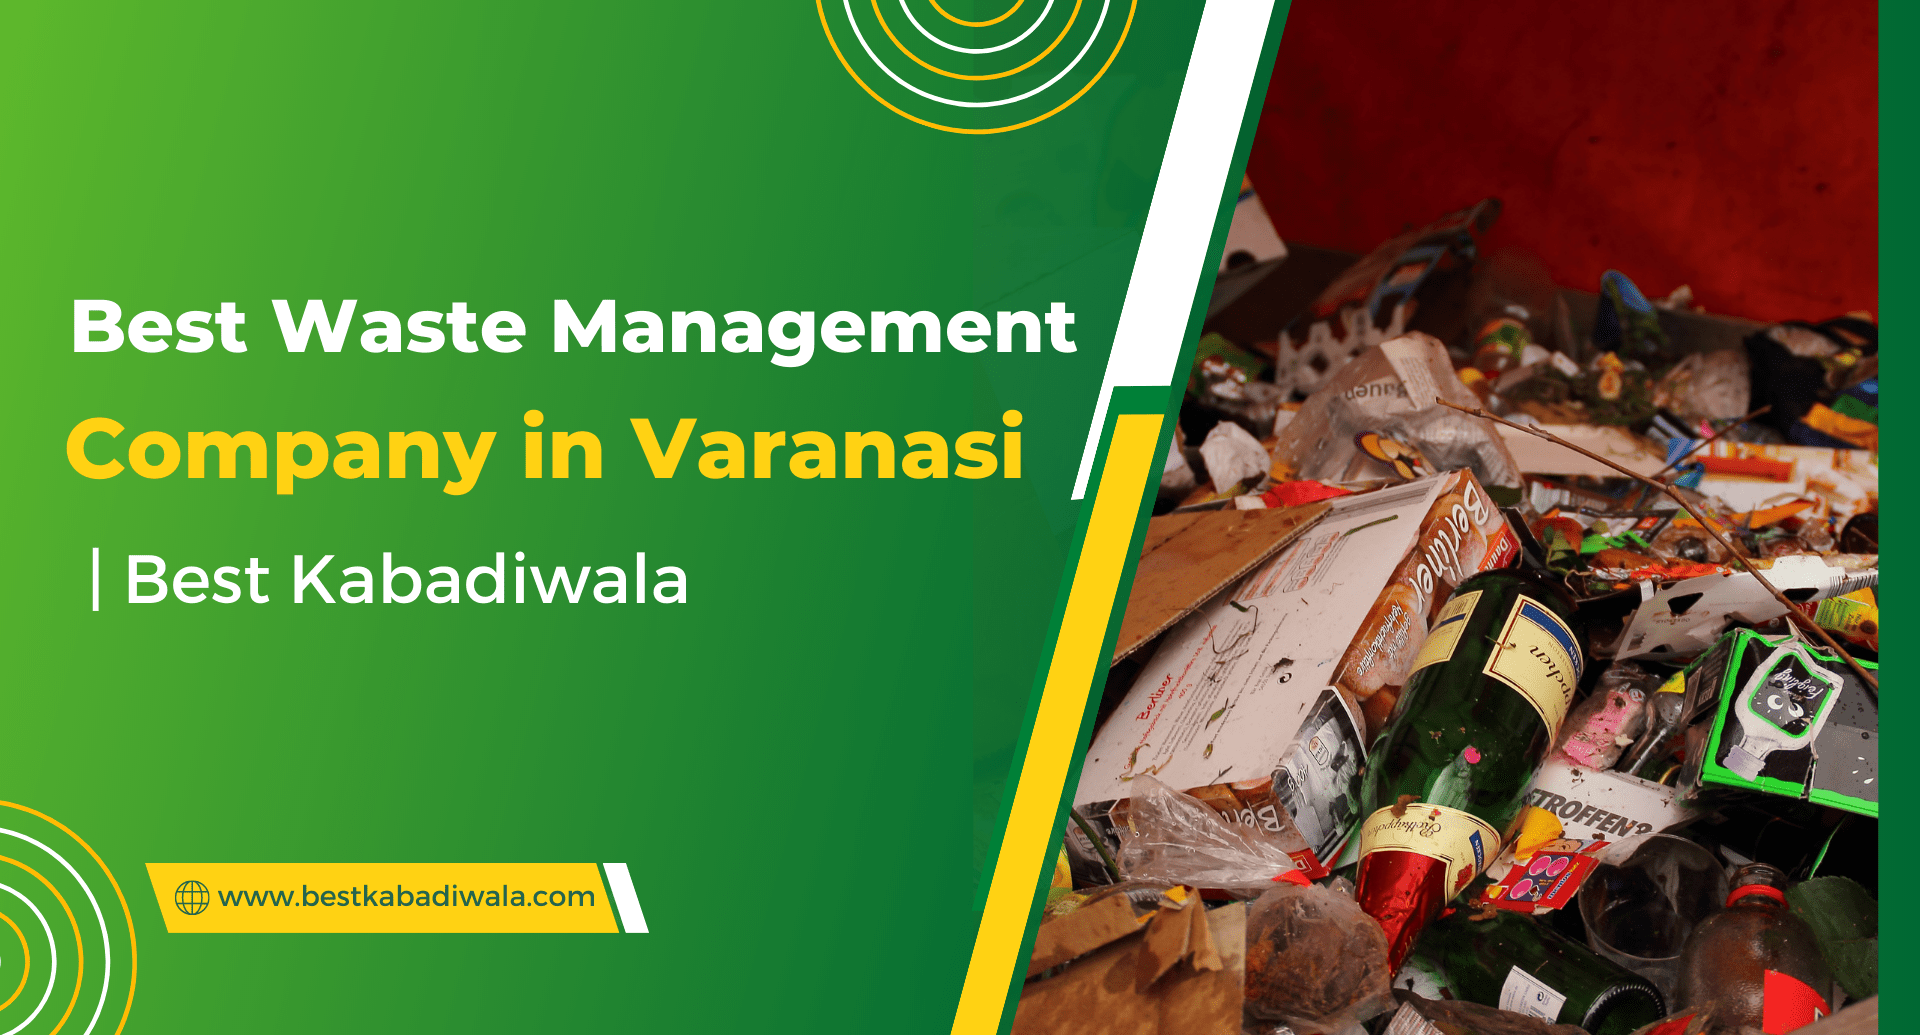 Best Waste Management Company in Varanasi